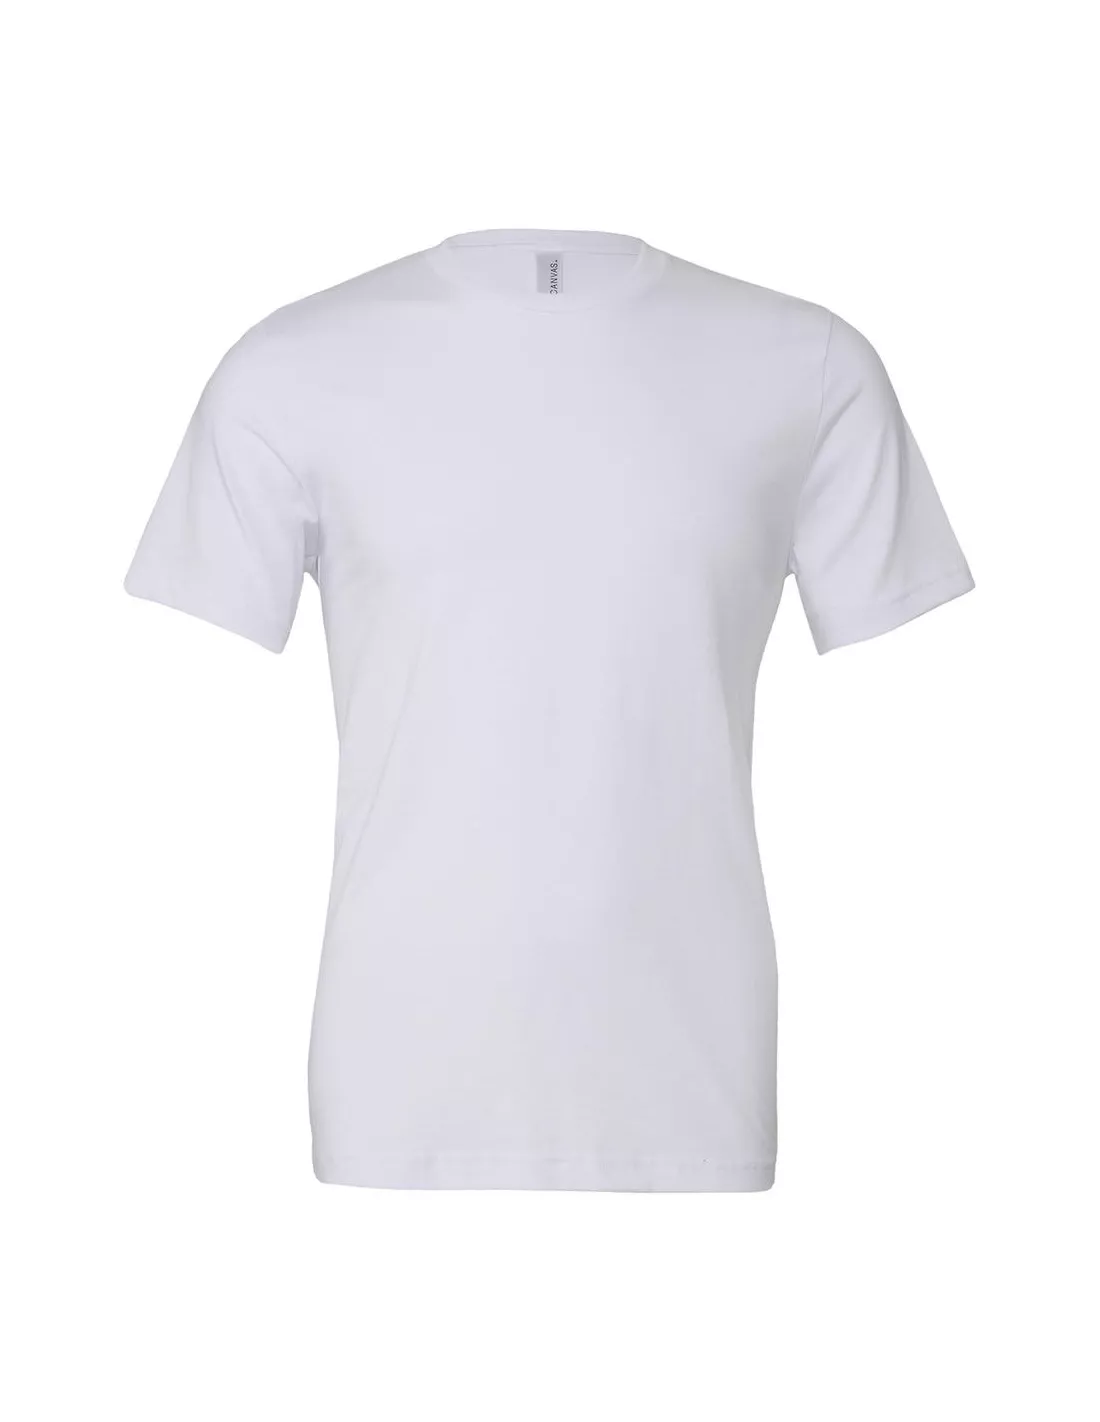 Camiseta Jersey manga corta unisex 